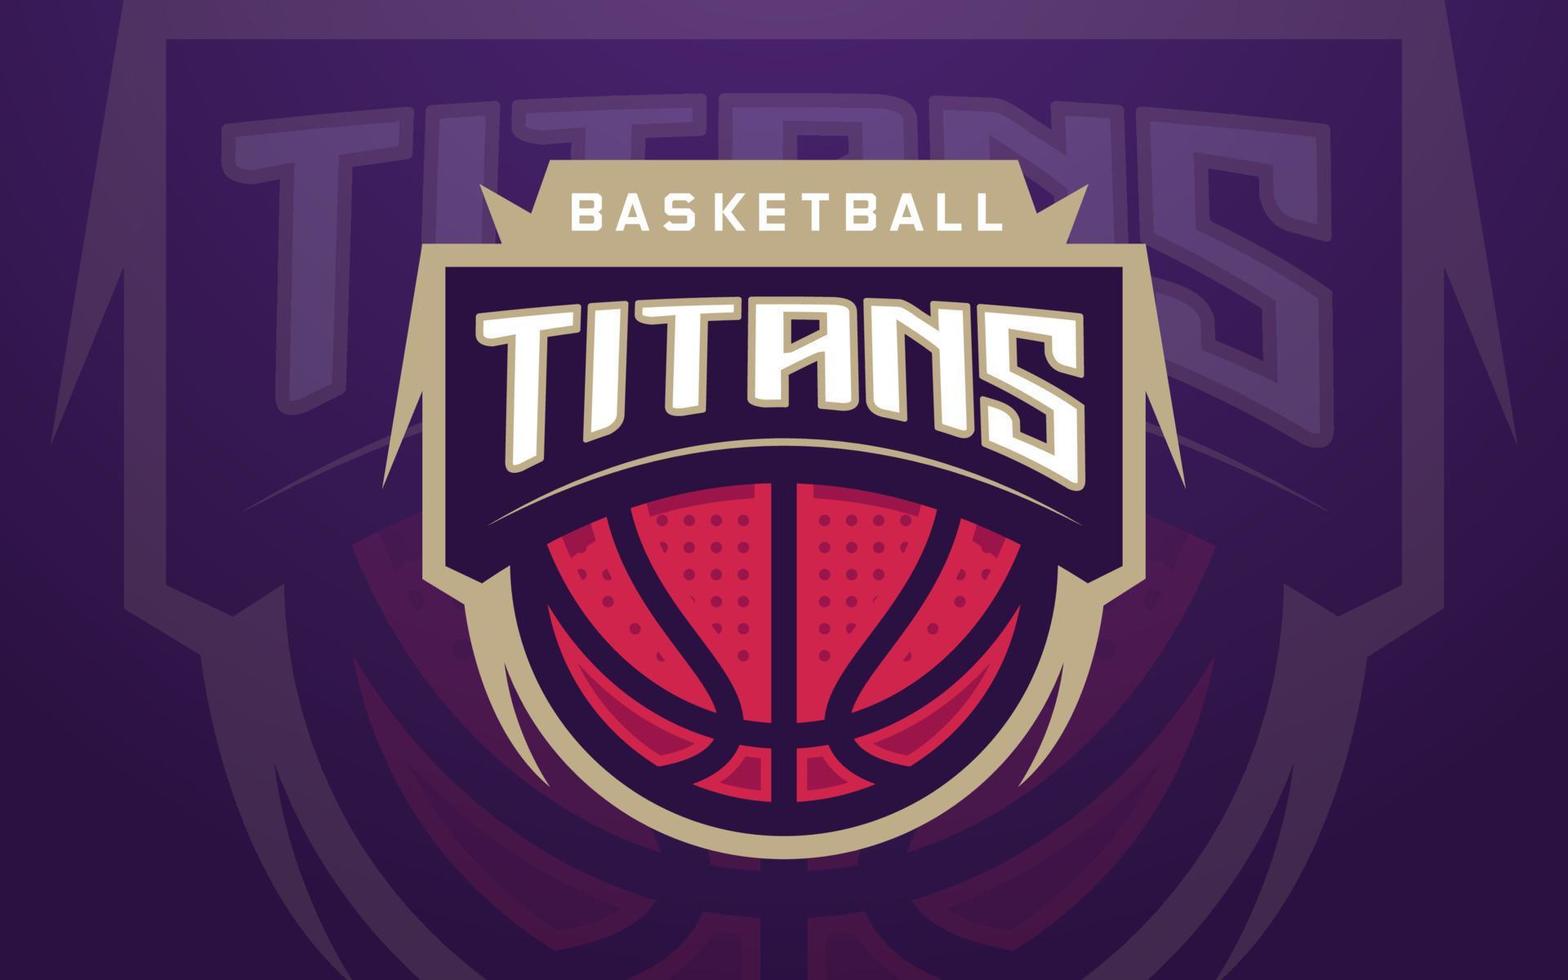 titans basketbalclub logo sjabloon voor sportteam en toernooi vector